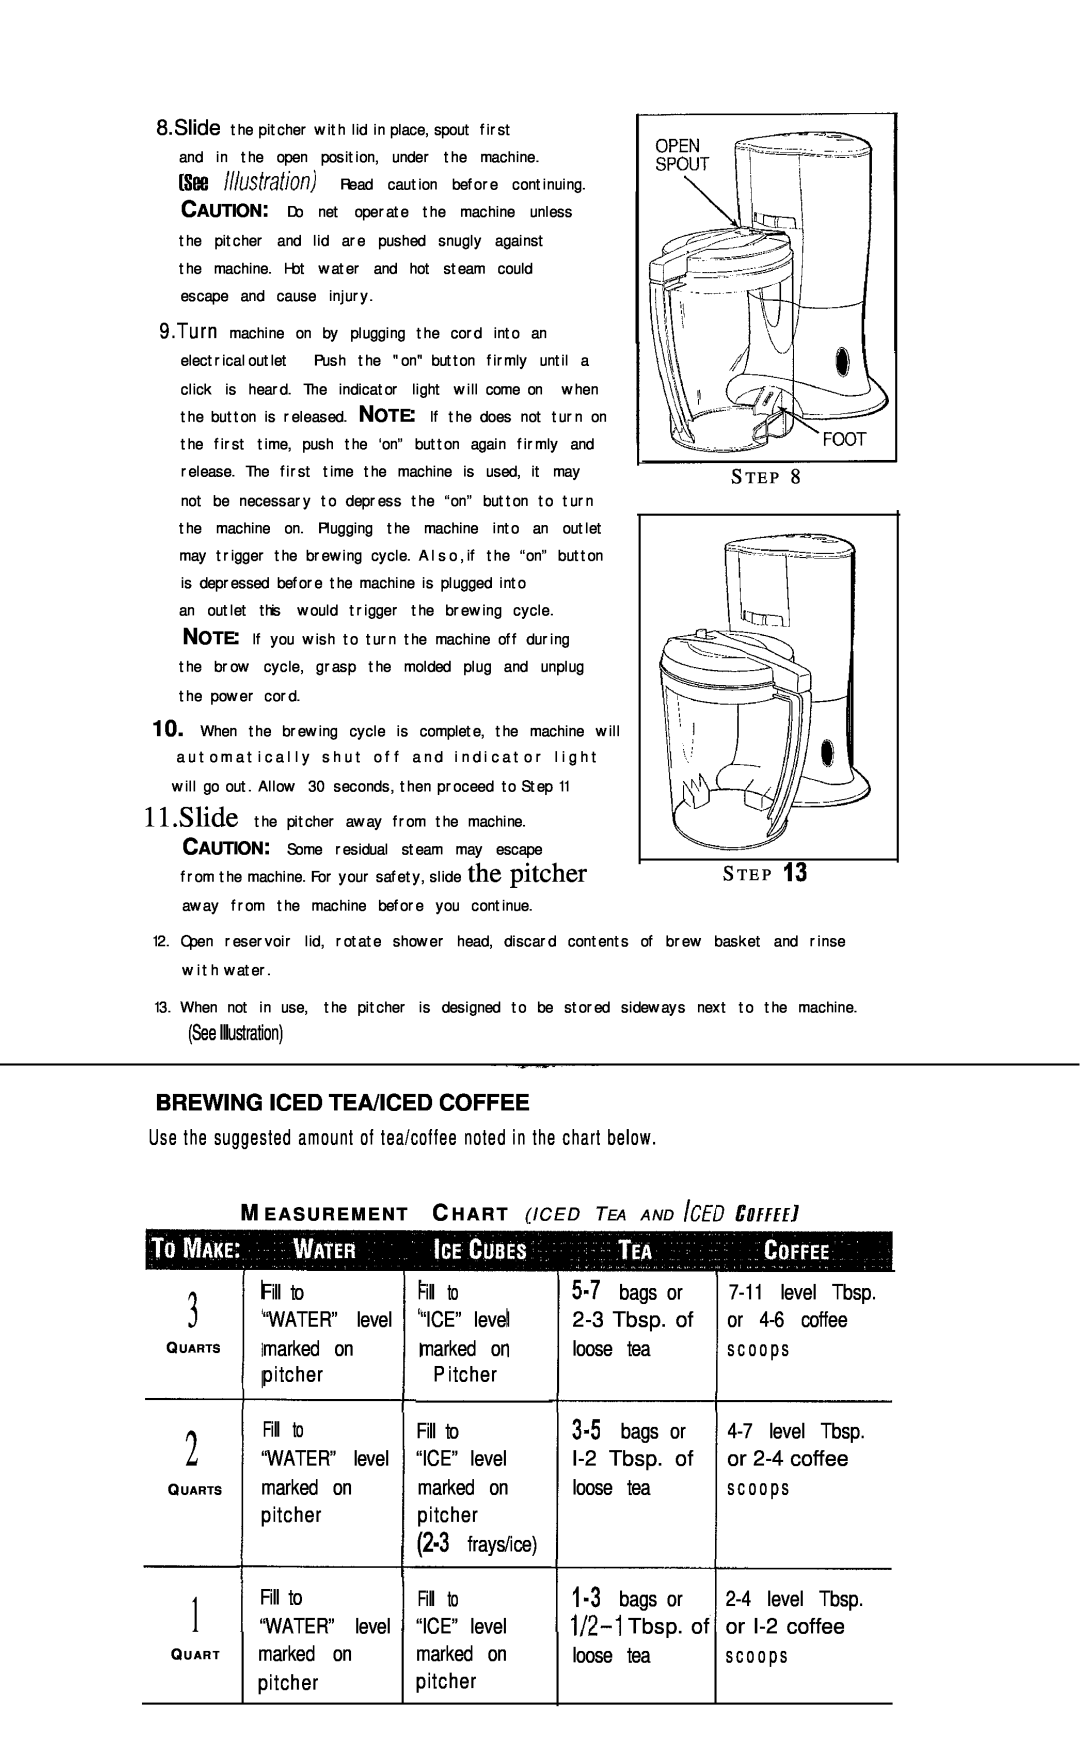 Mr. Coffee TM20 instruction manual See Illustration 